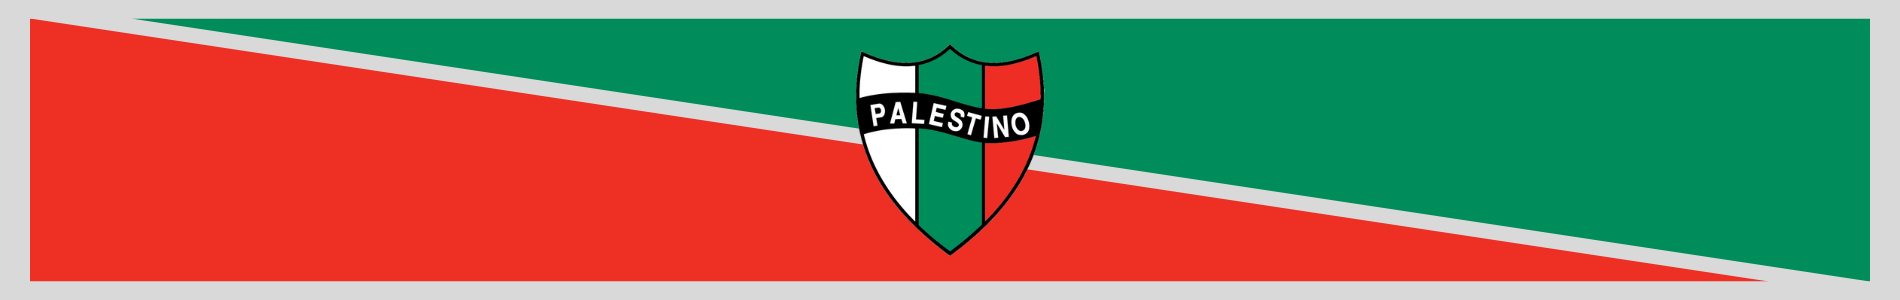 maillot de foot palestine